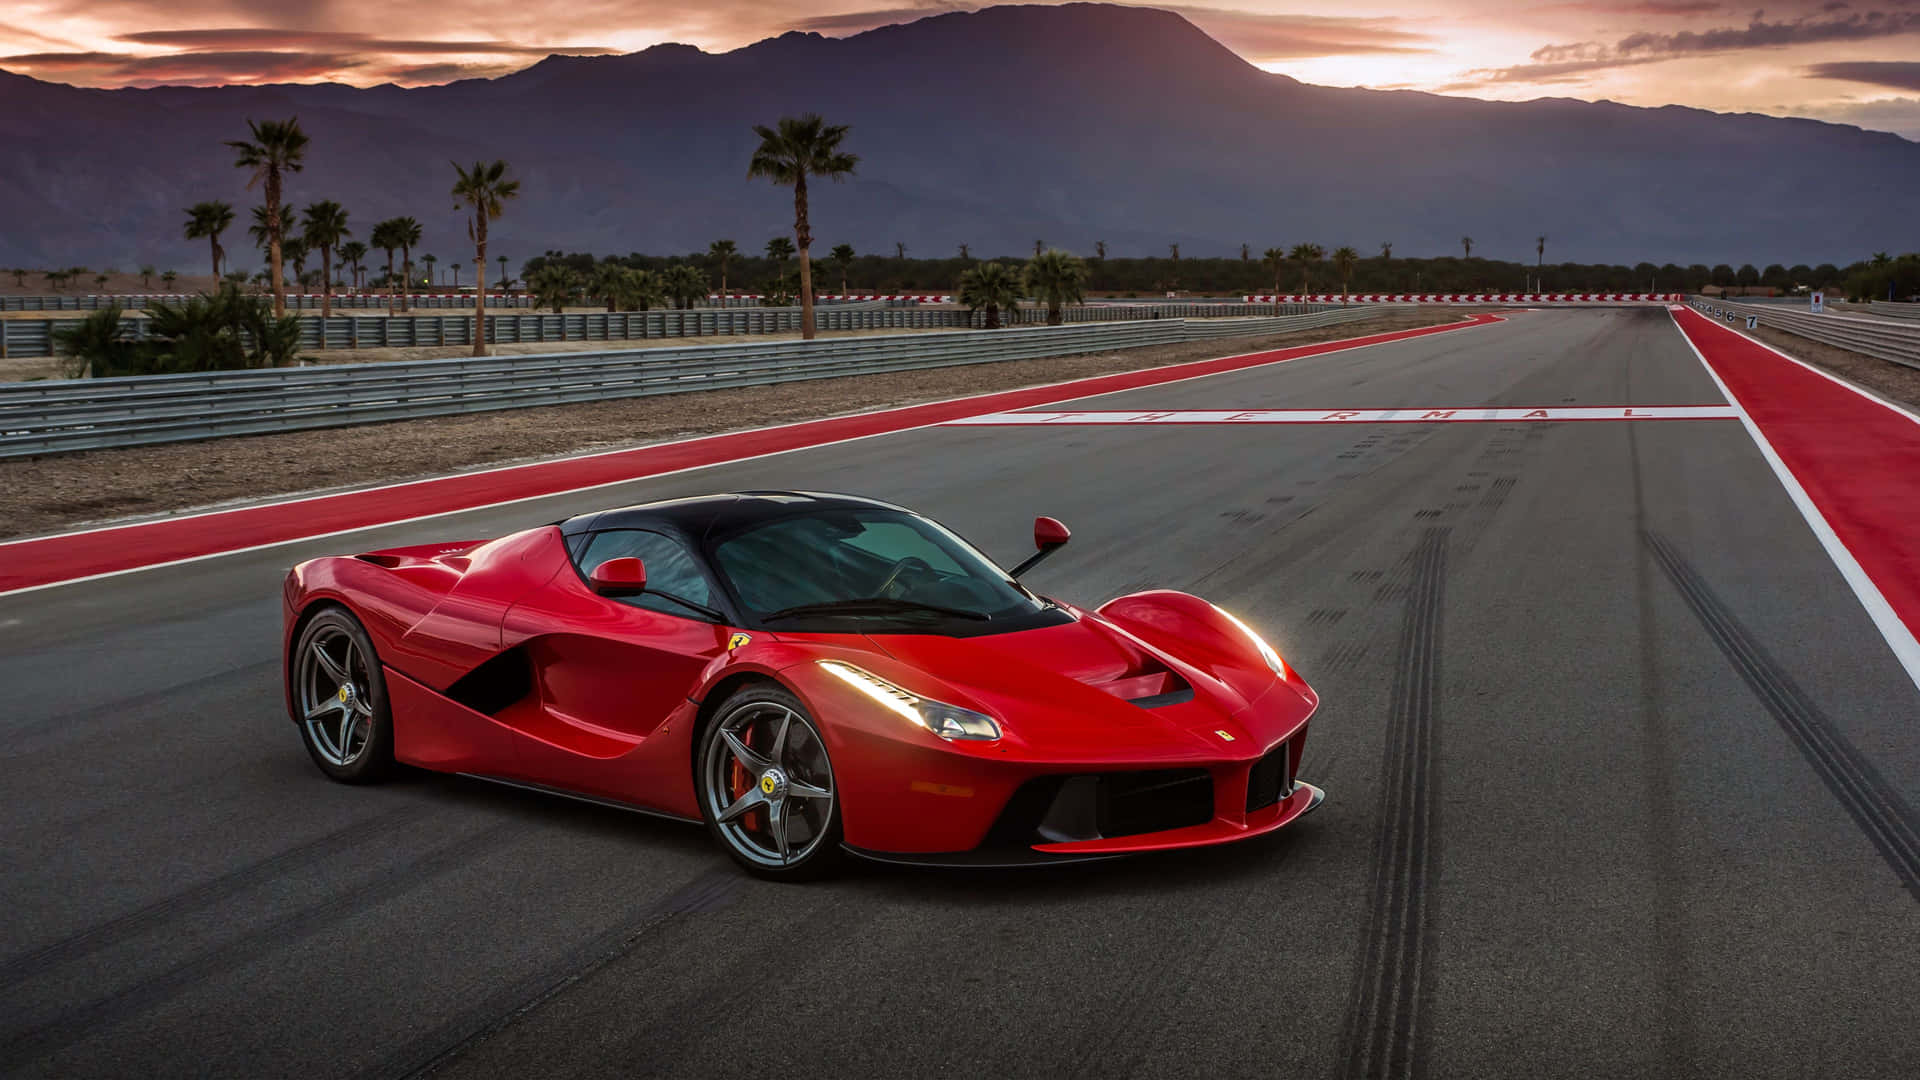 Stunning Ferrari LaFerrari in Motion Wallpaper